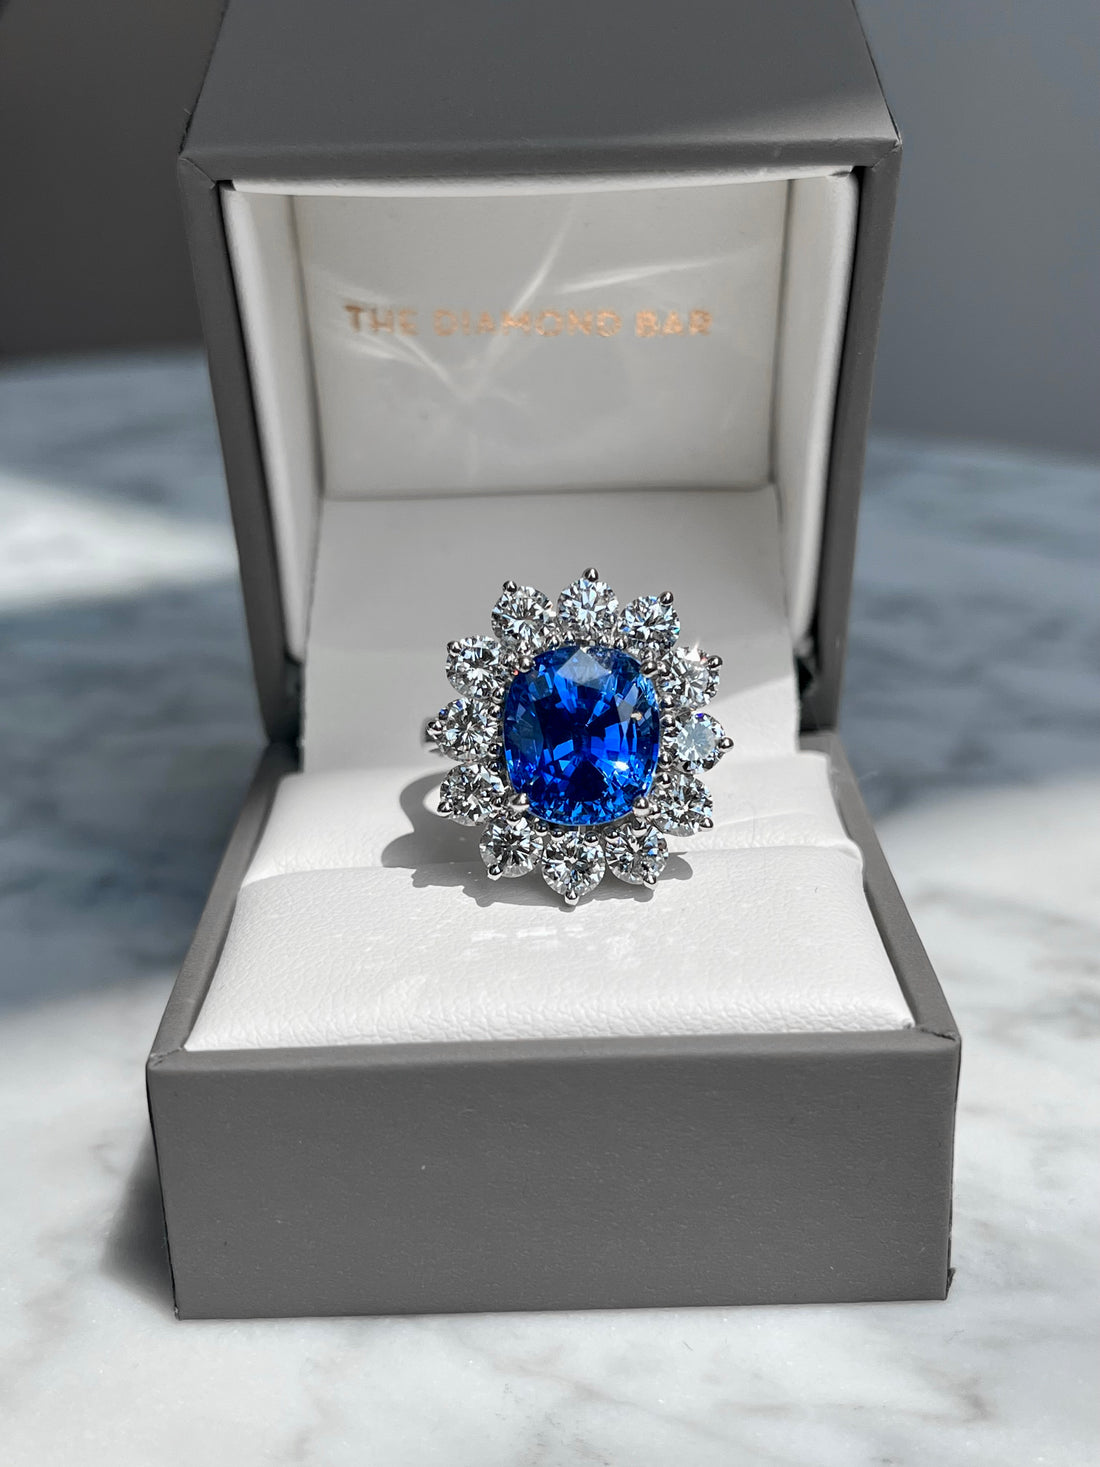 Custom Platinum Blue Sapphire and Diamond Halo Ring Designed By Chris Phillips at The Diamond Bar